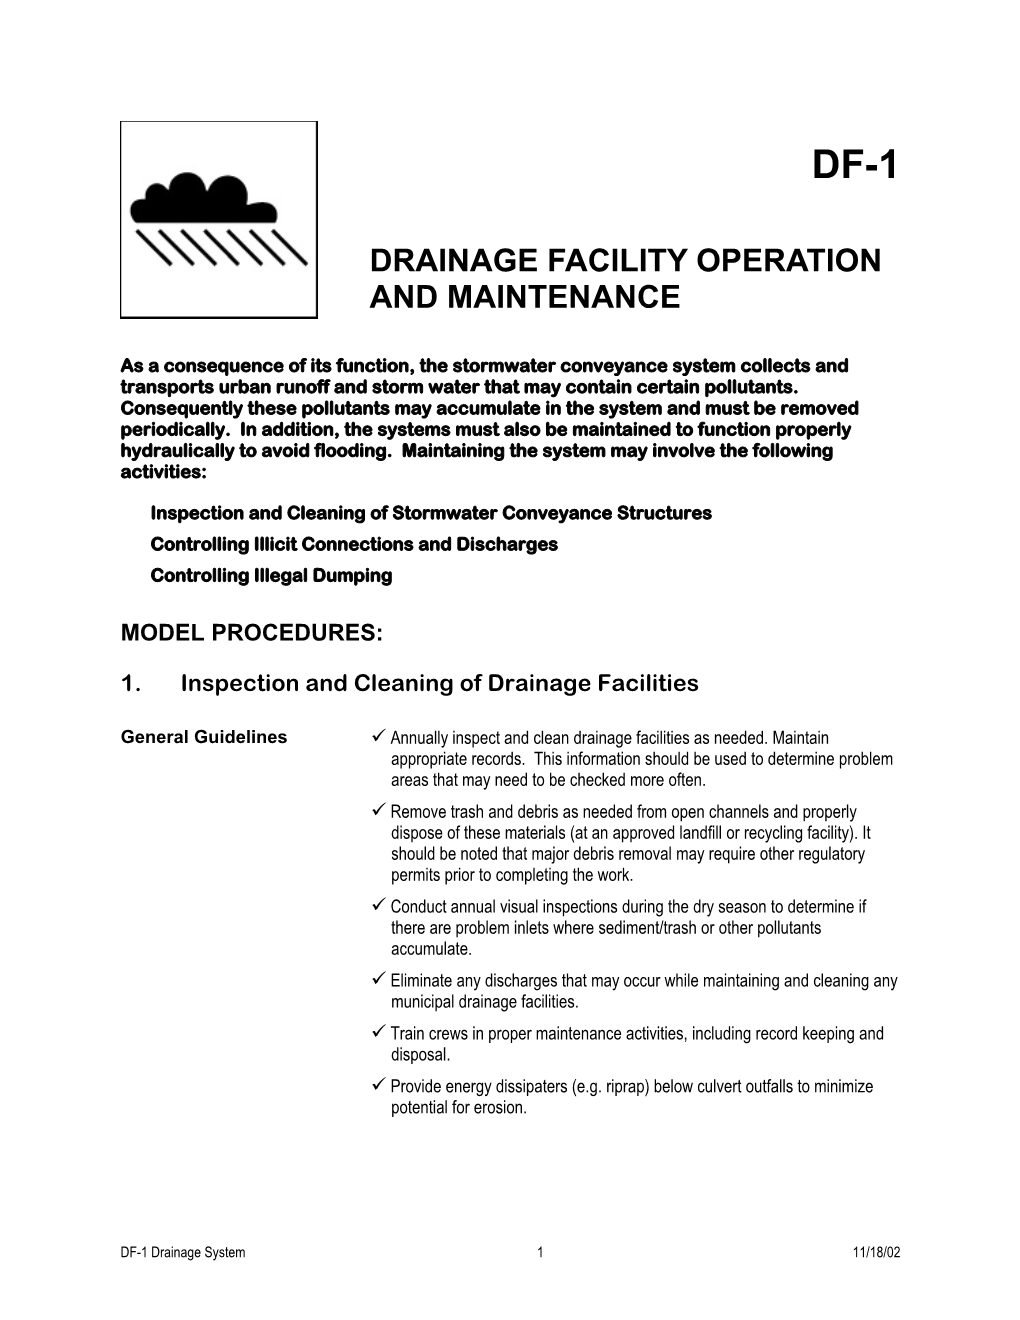 Drainage Facility Operation and Maintenance